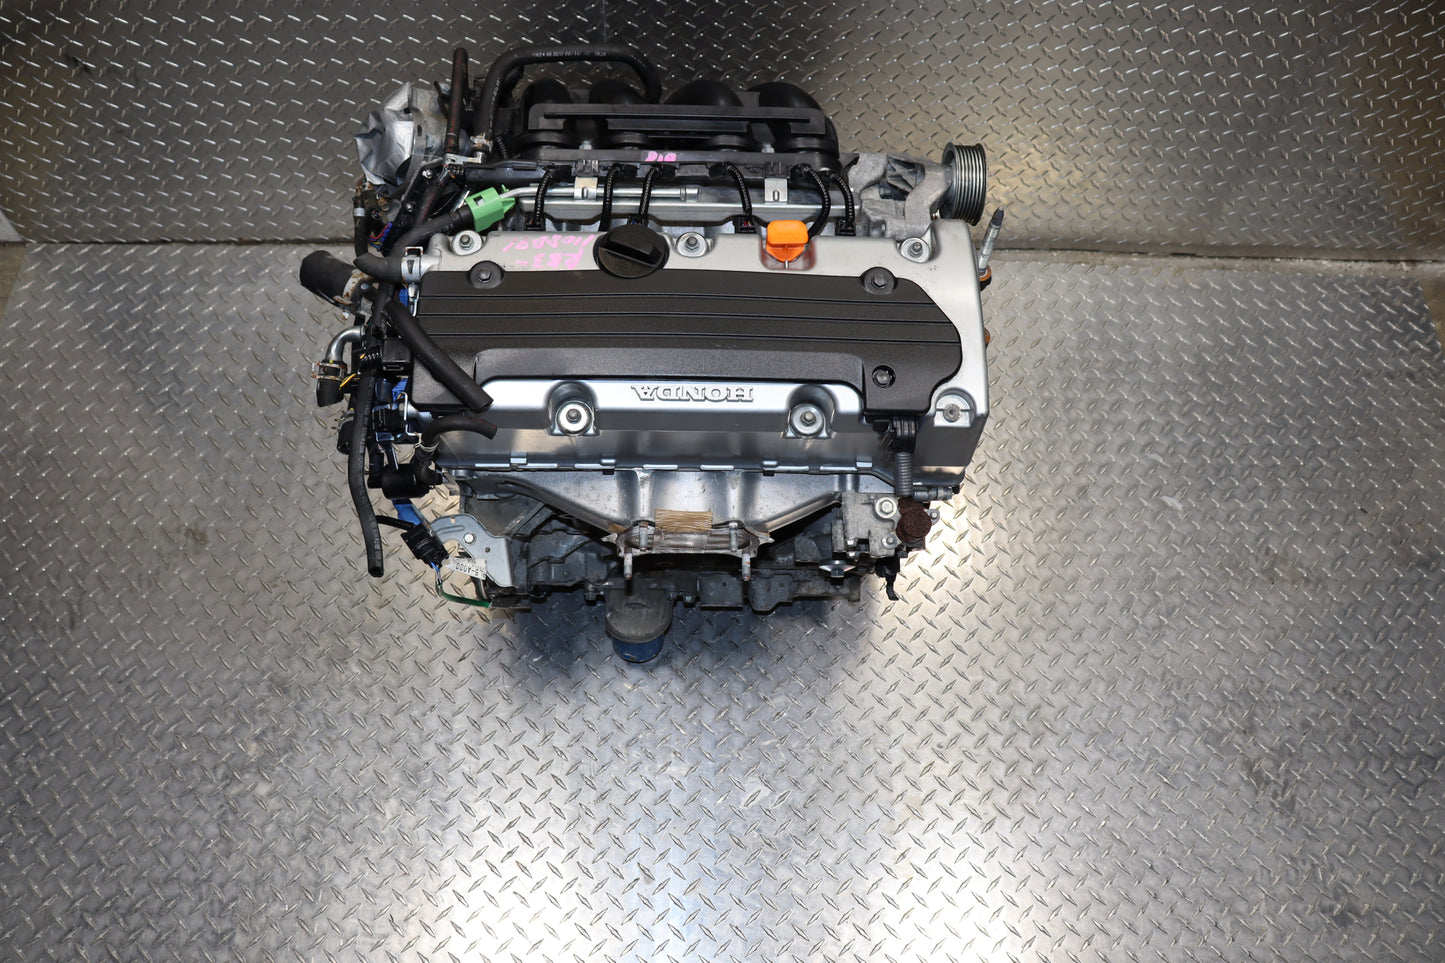 JDM K24A 12 13 14 15 HONDA CIVIC SI MOTOR 2.4L DOHC I-VTEC ENGINE